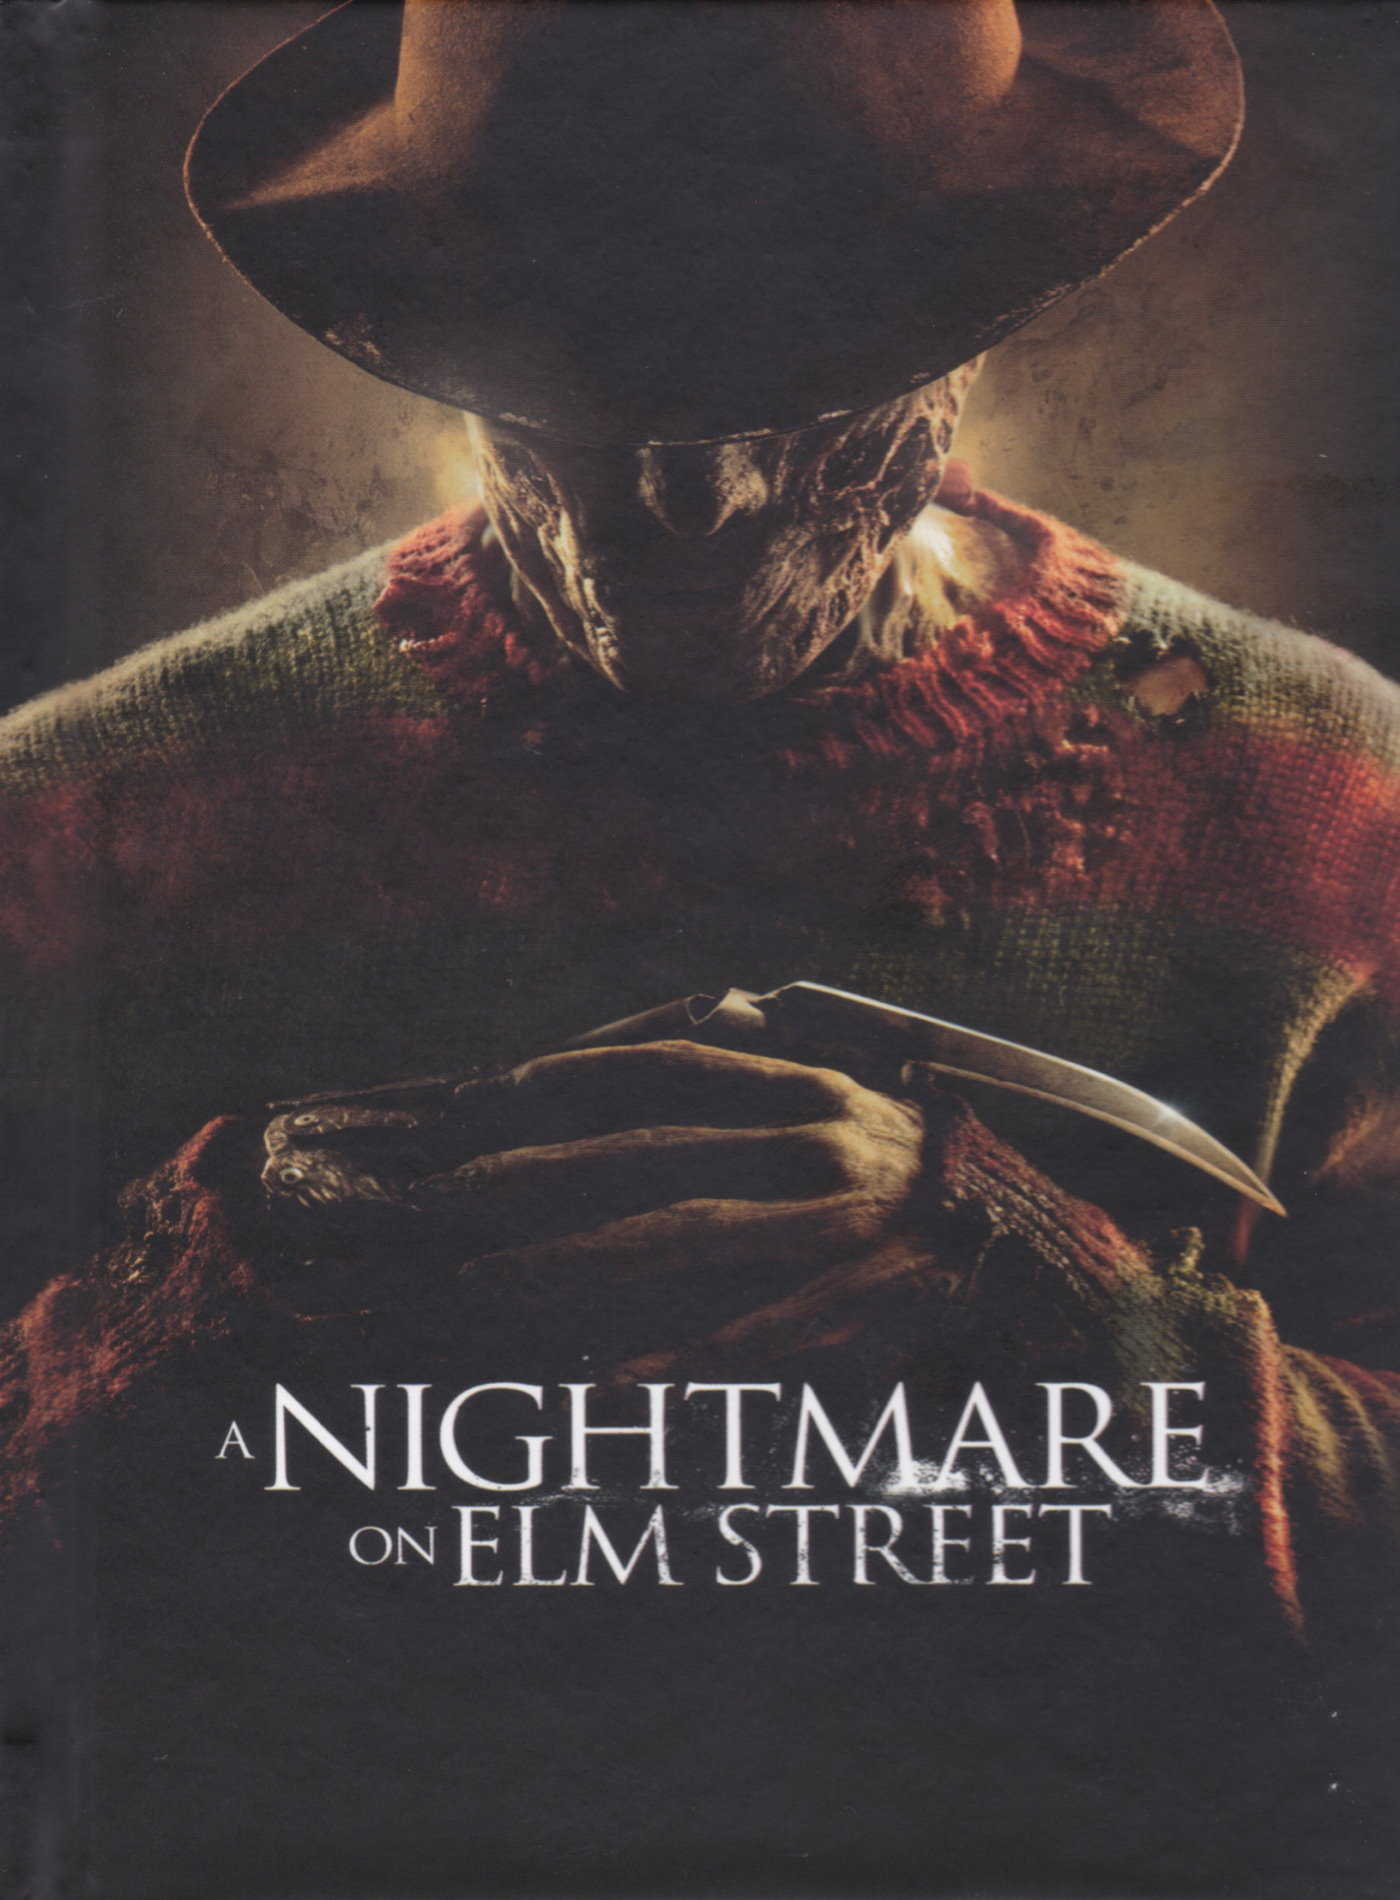 Cover - A Nightmare on Elm Street.jpg